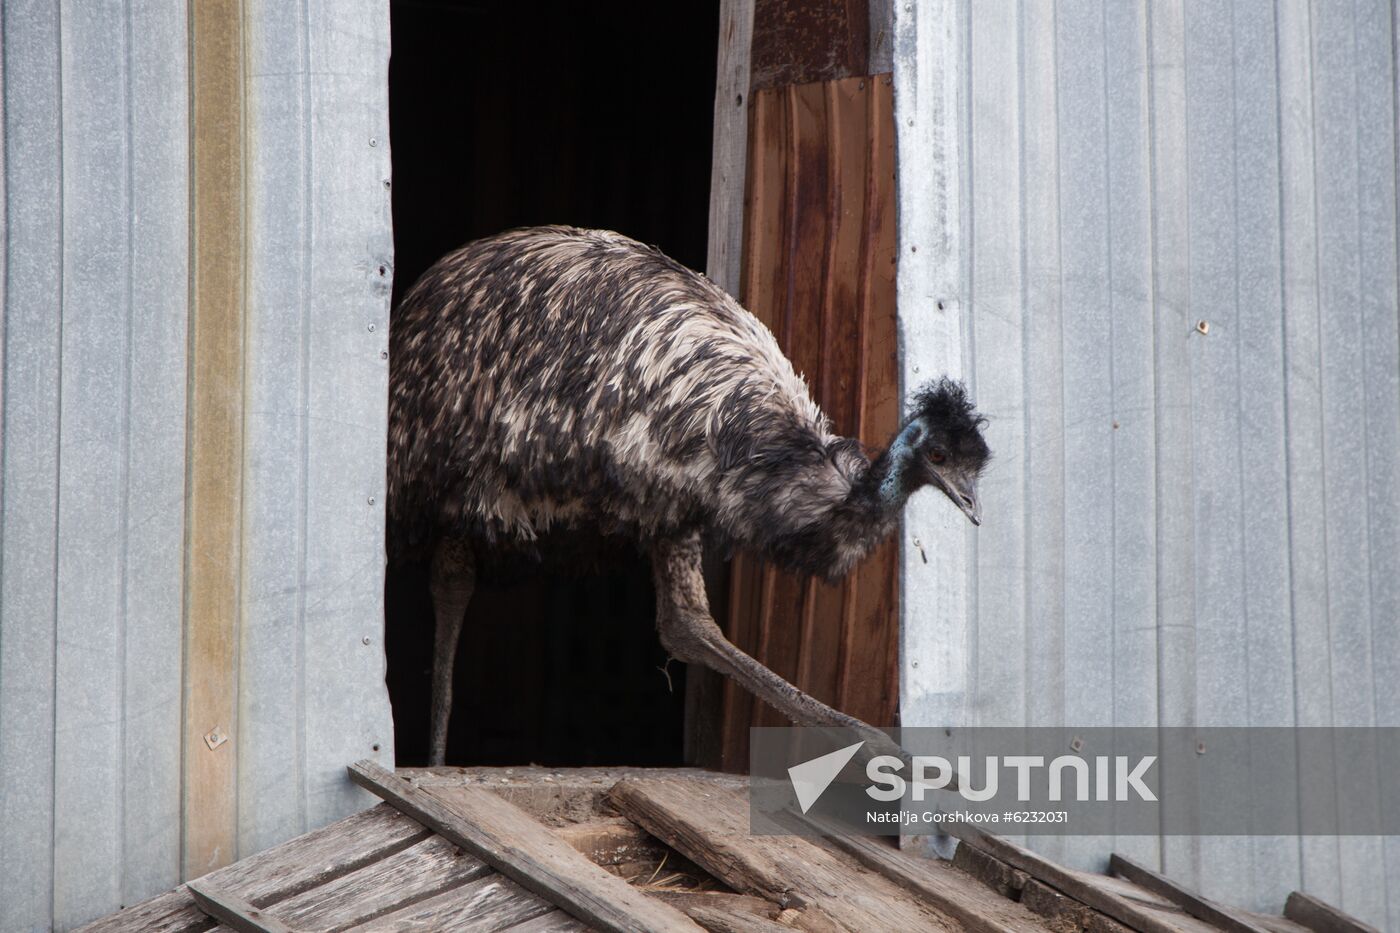 Russia Ostrich Farm